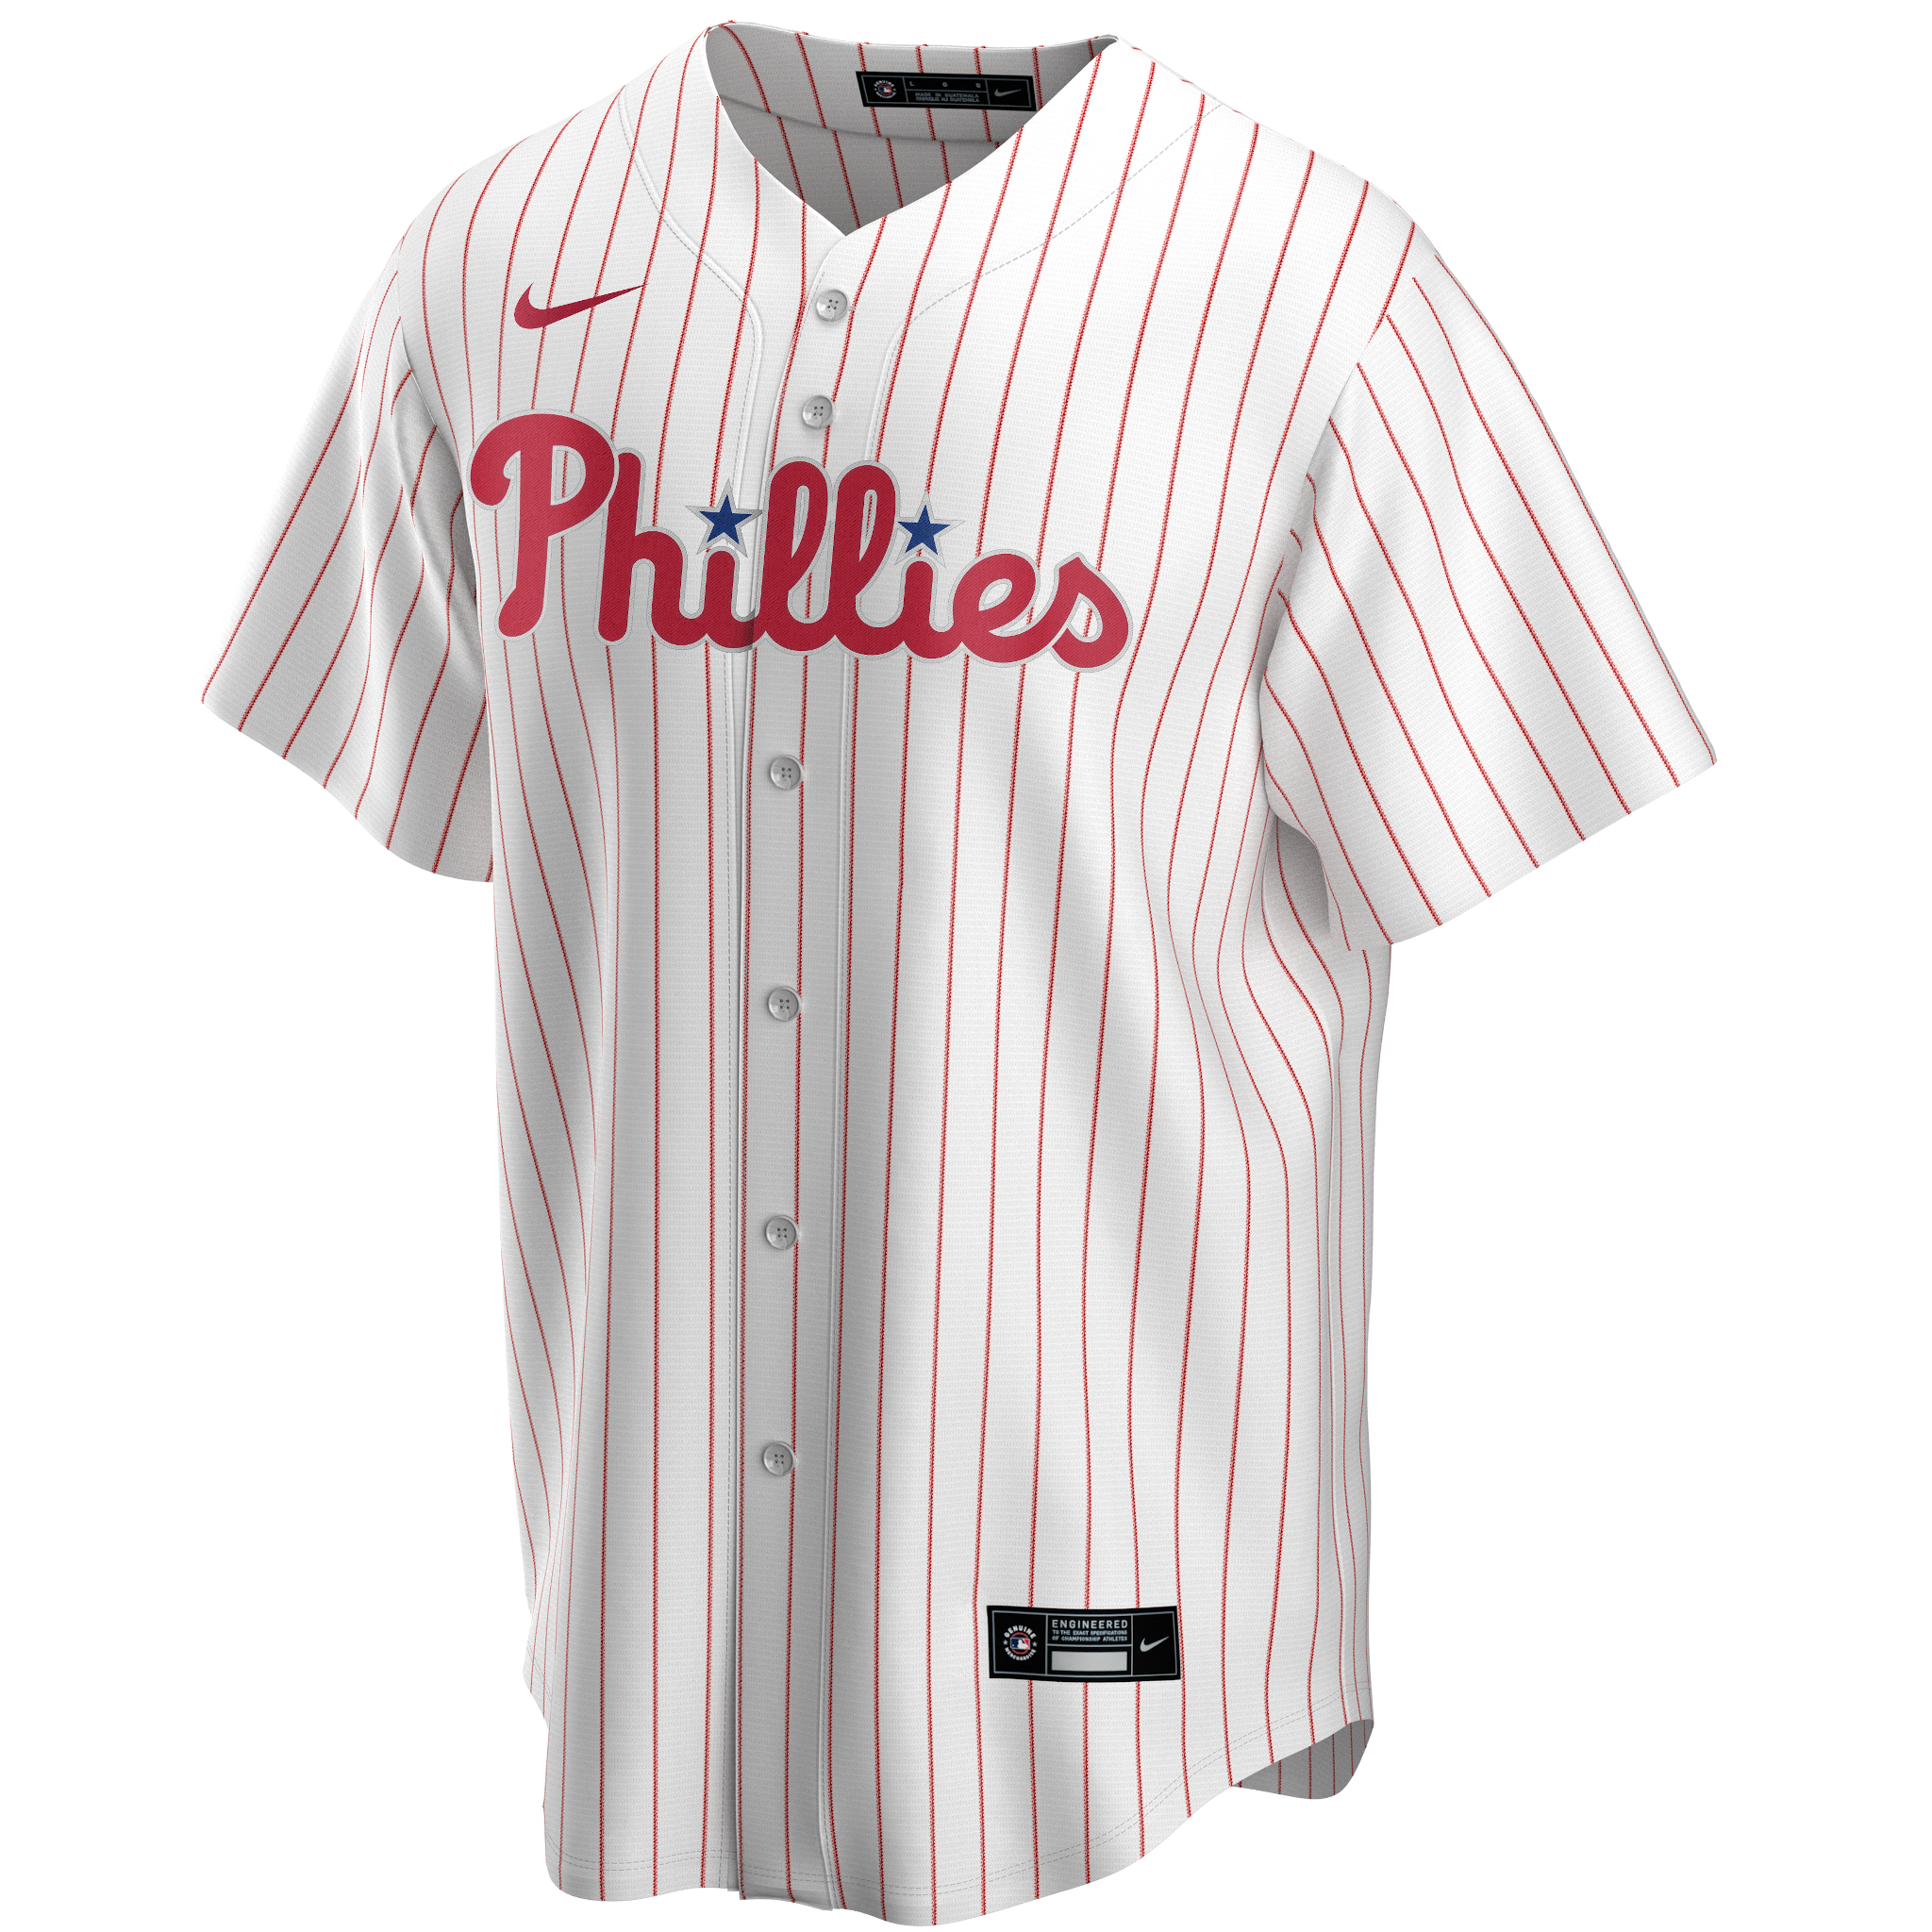 Philadelphia Phillies Jerseys, Phillies Baseball Jersey, Uniforms